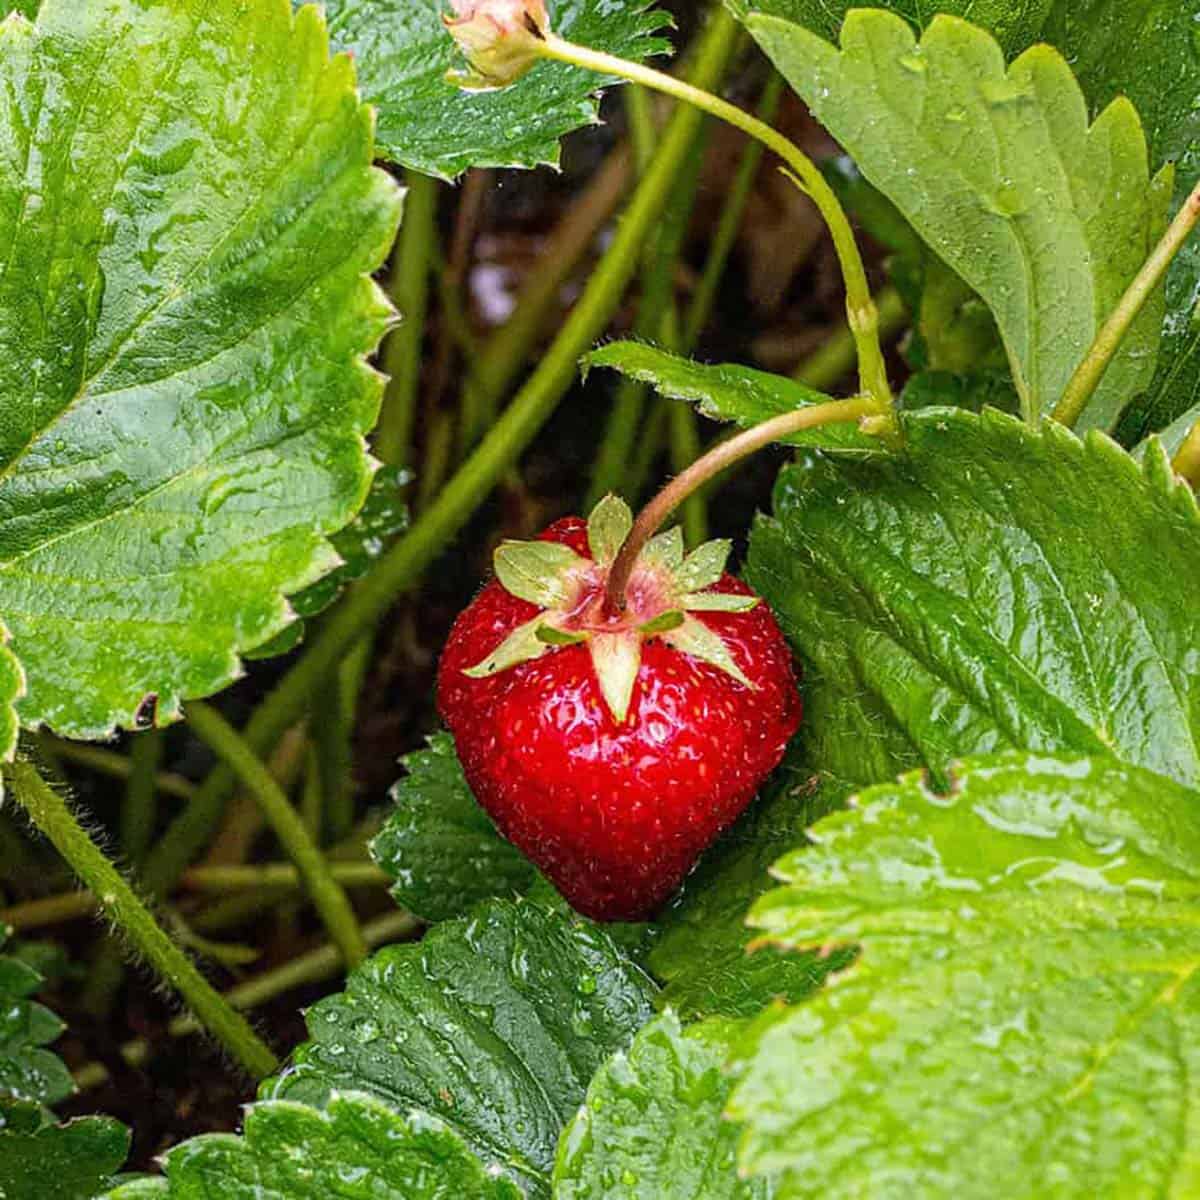 A fresh strawberry growing in a home garden.